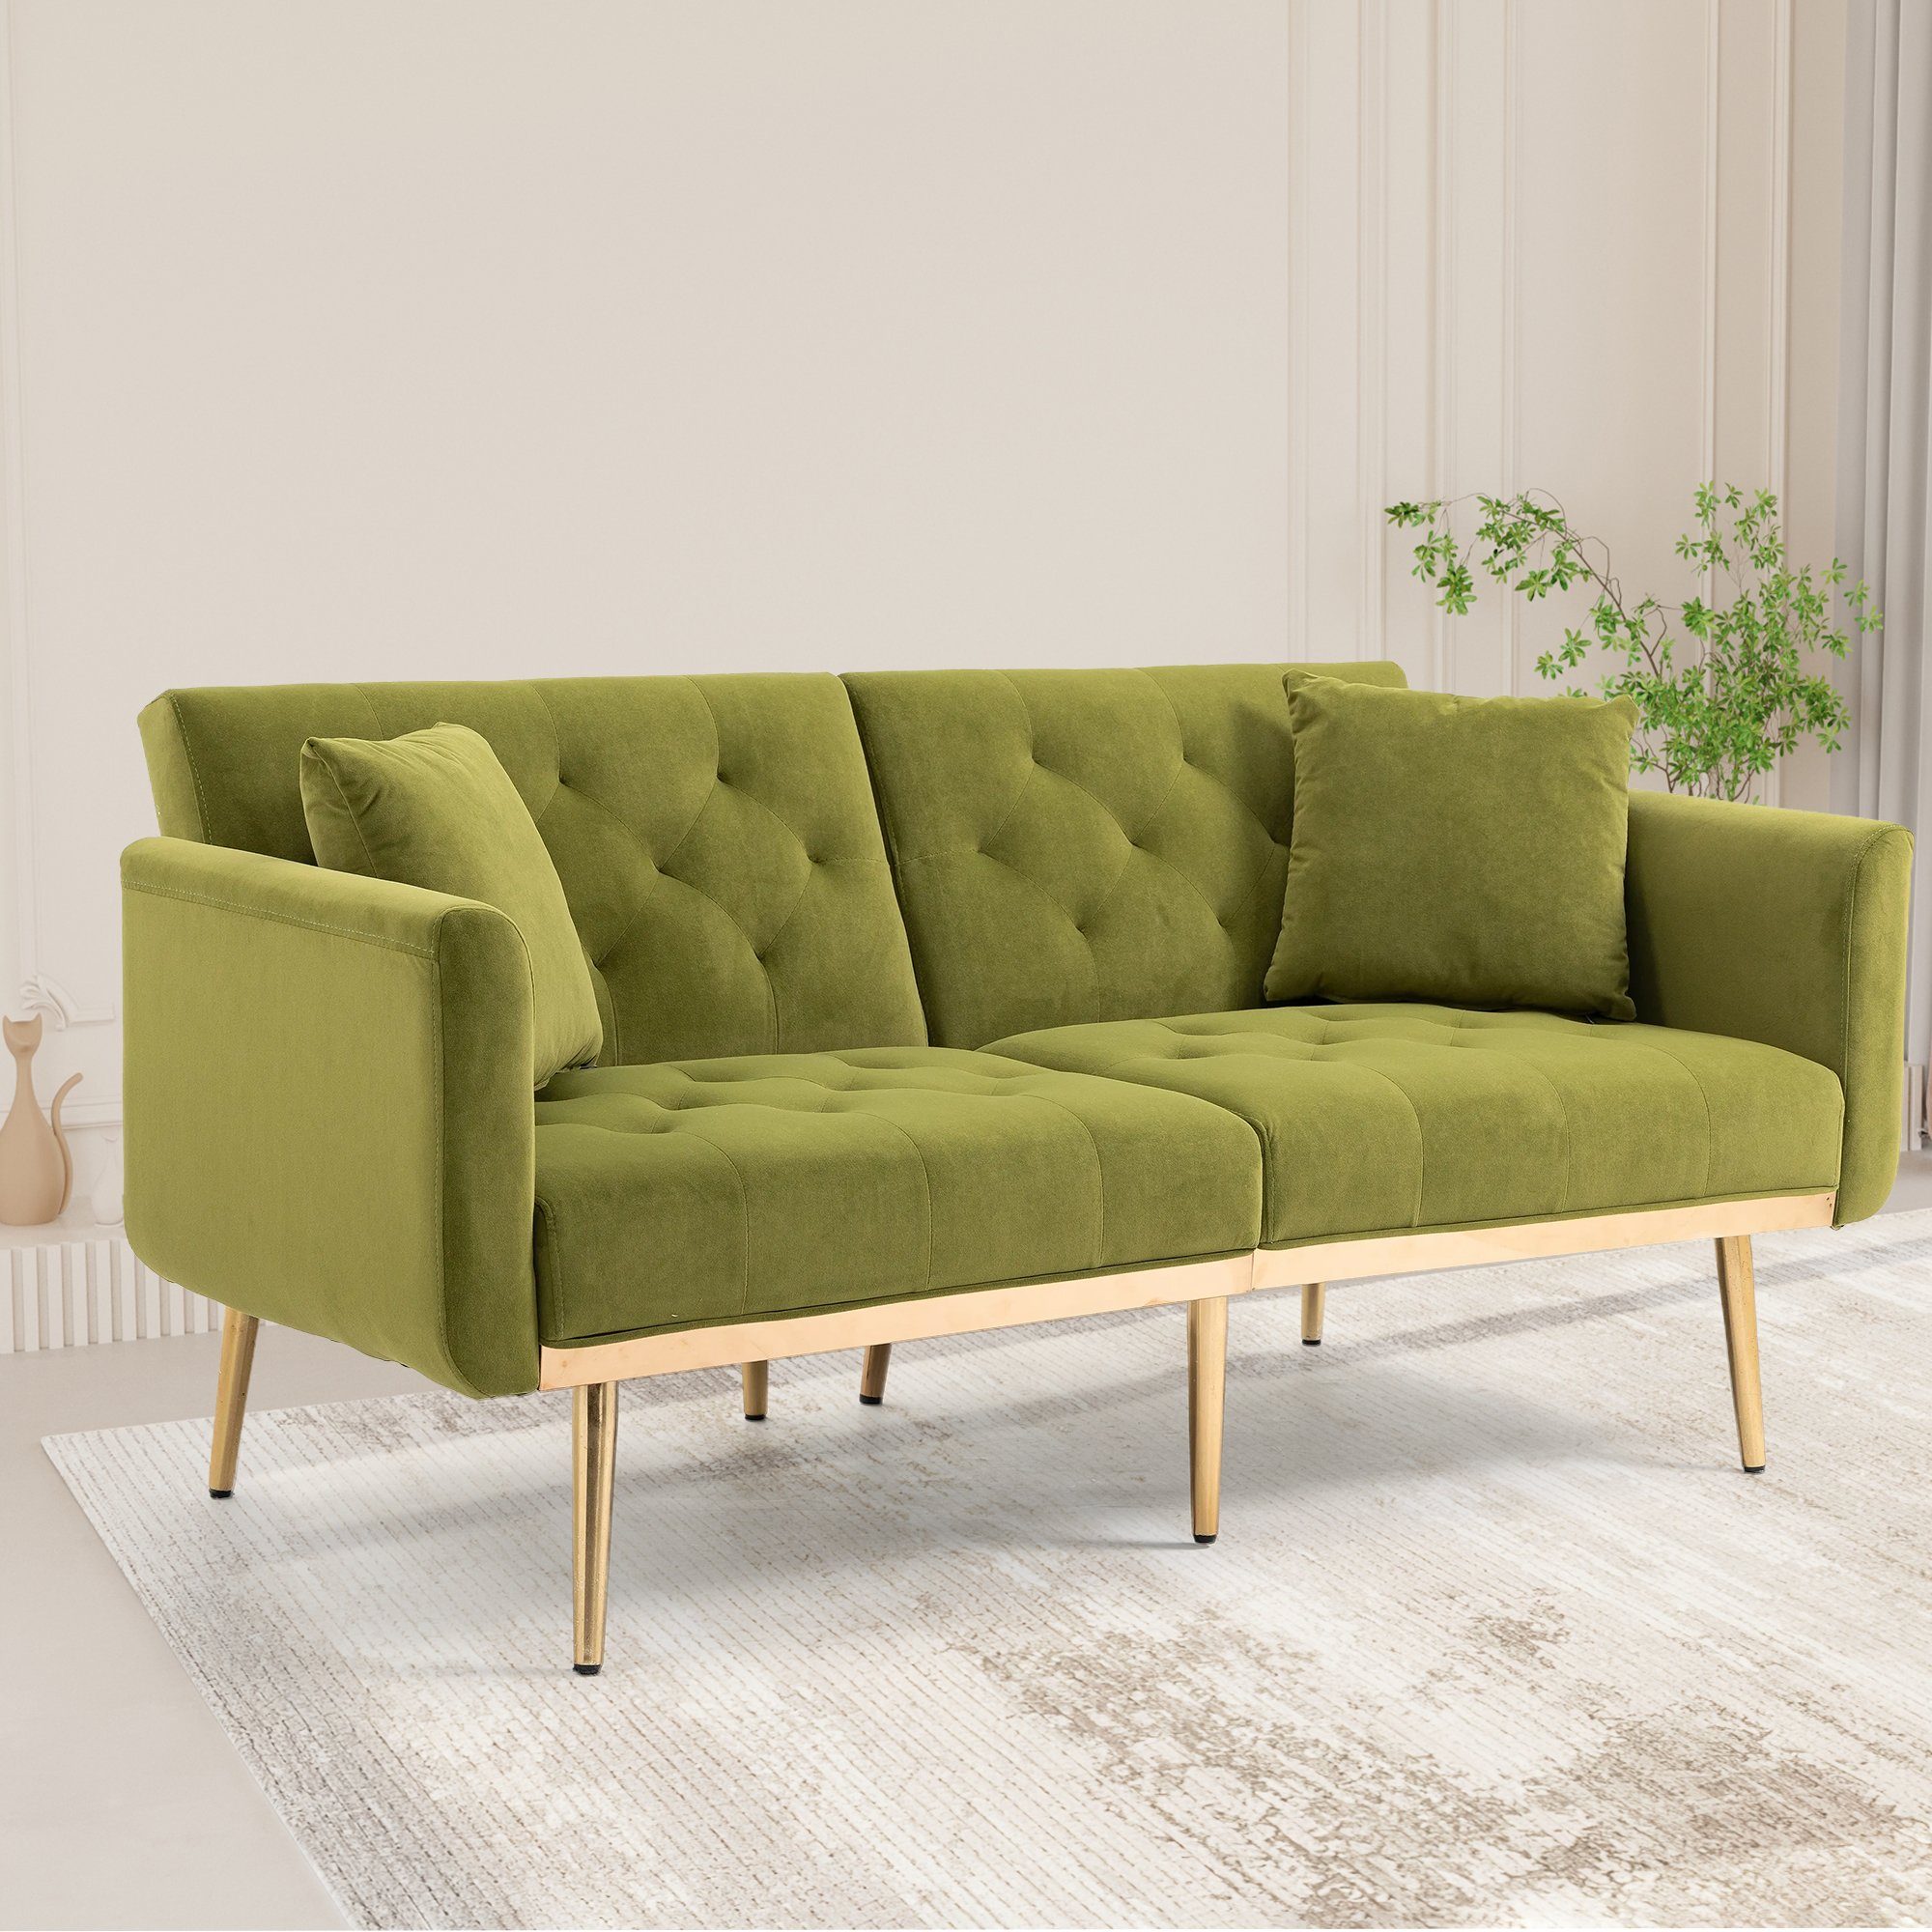 OKWISH Sofa Schlafsofa, Akzentsofa, Loveseat-Sofa mit Metallfüßen Grün